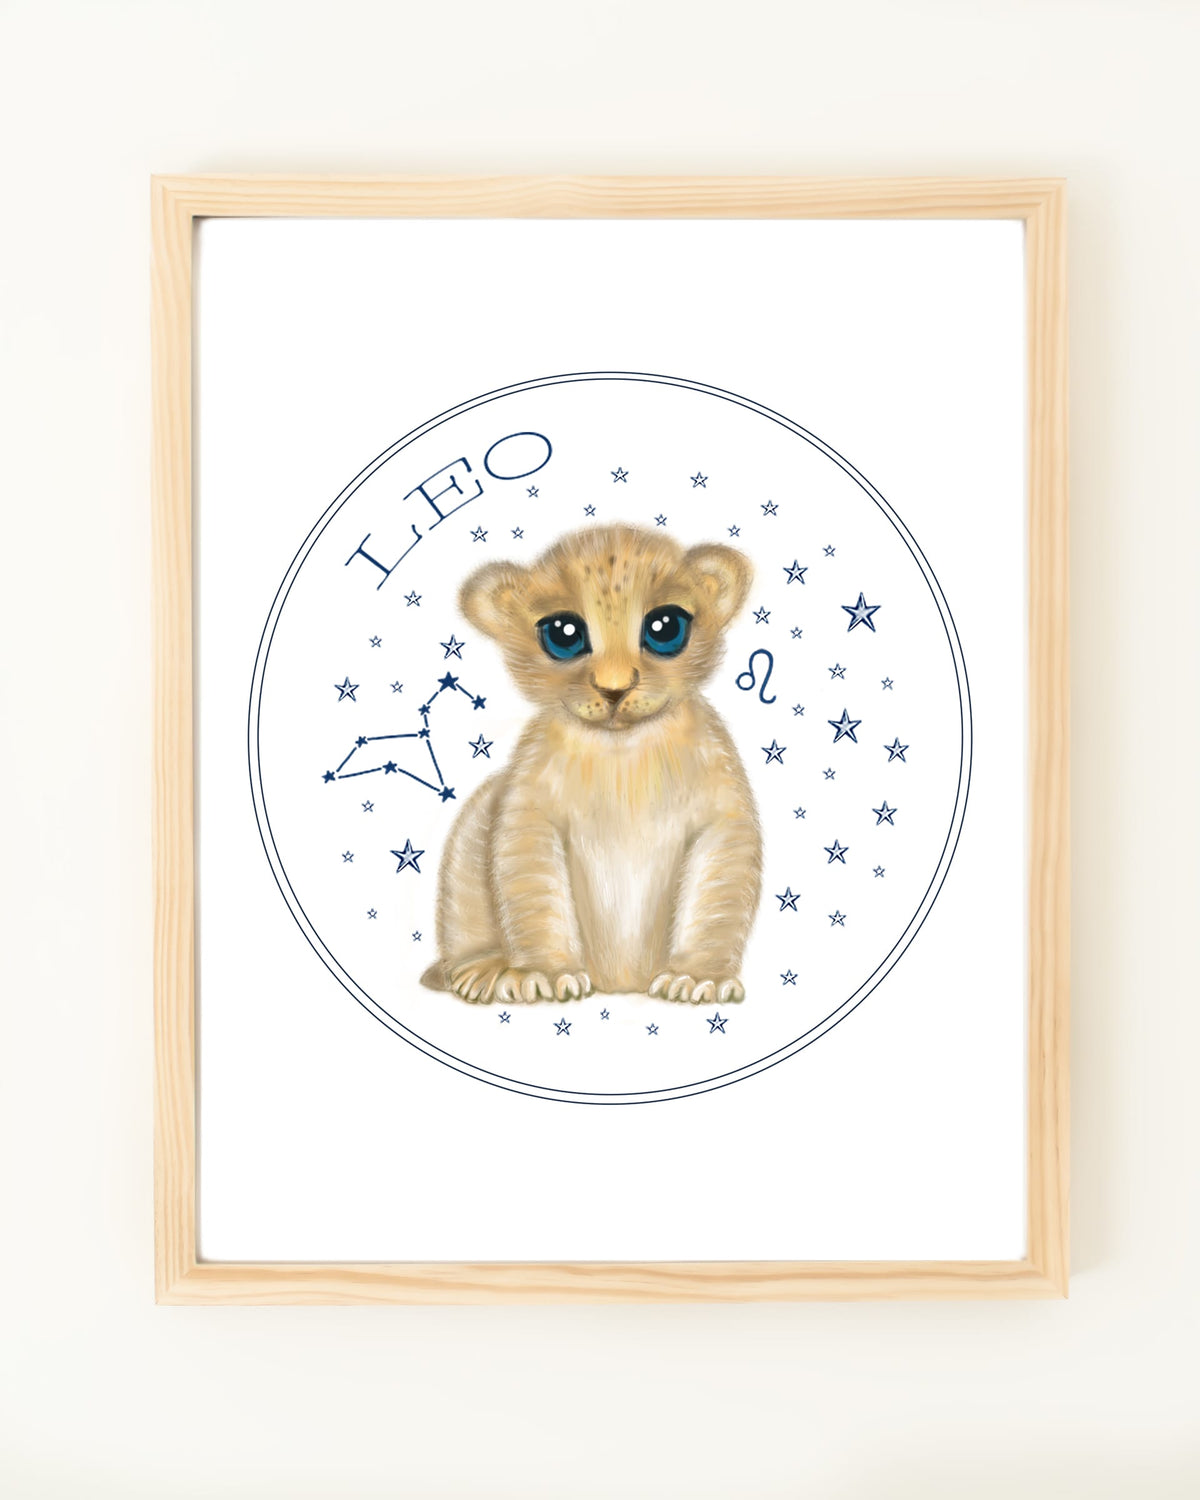 Framed hand drawn stars zodiac nursery decor wall art poster Leo cute baby animal lion cub